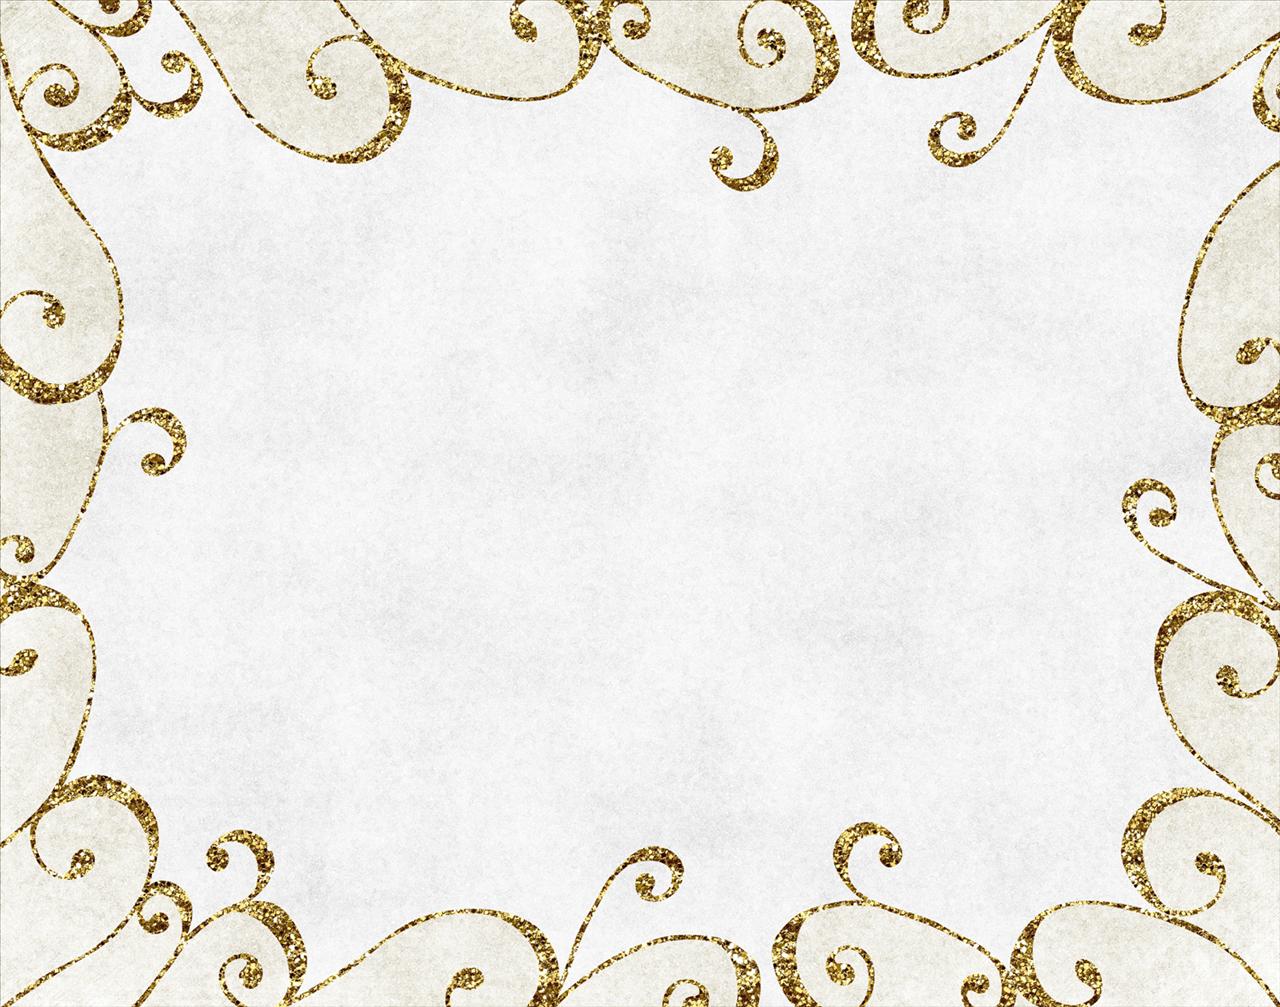 Wallpaper Border - Gold And Silver Borders - 1280x1007 Wallpaper 